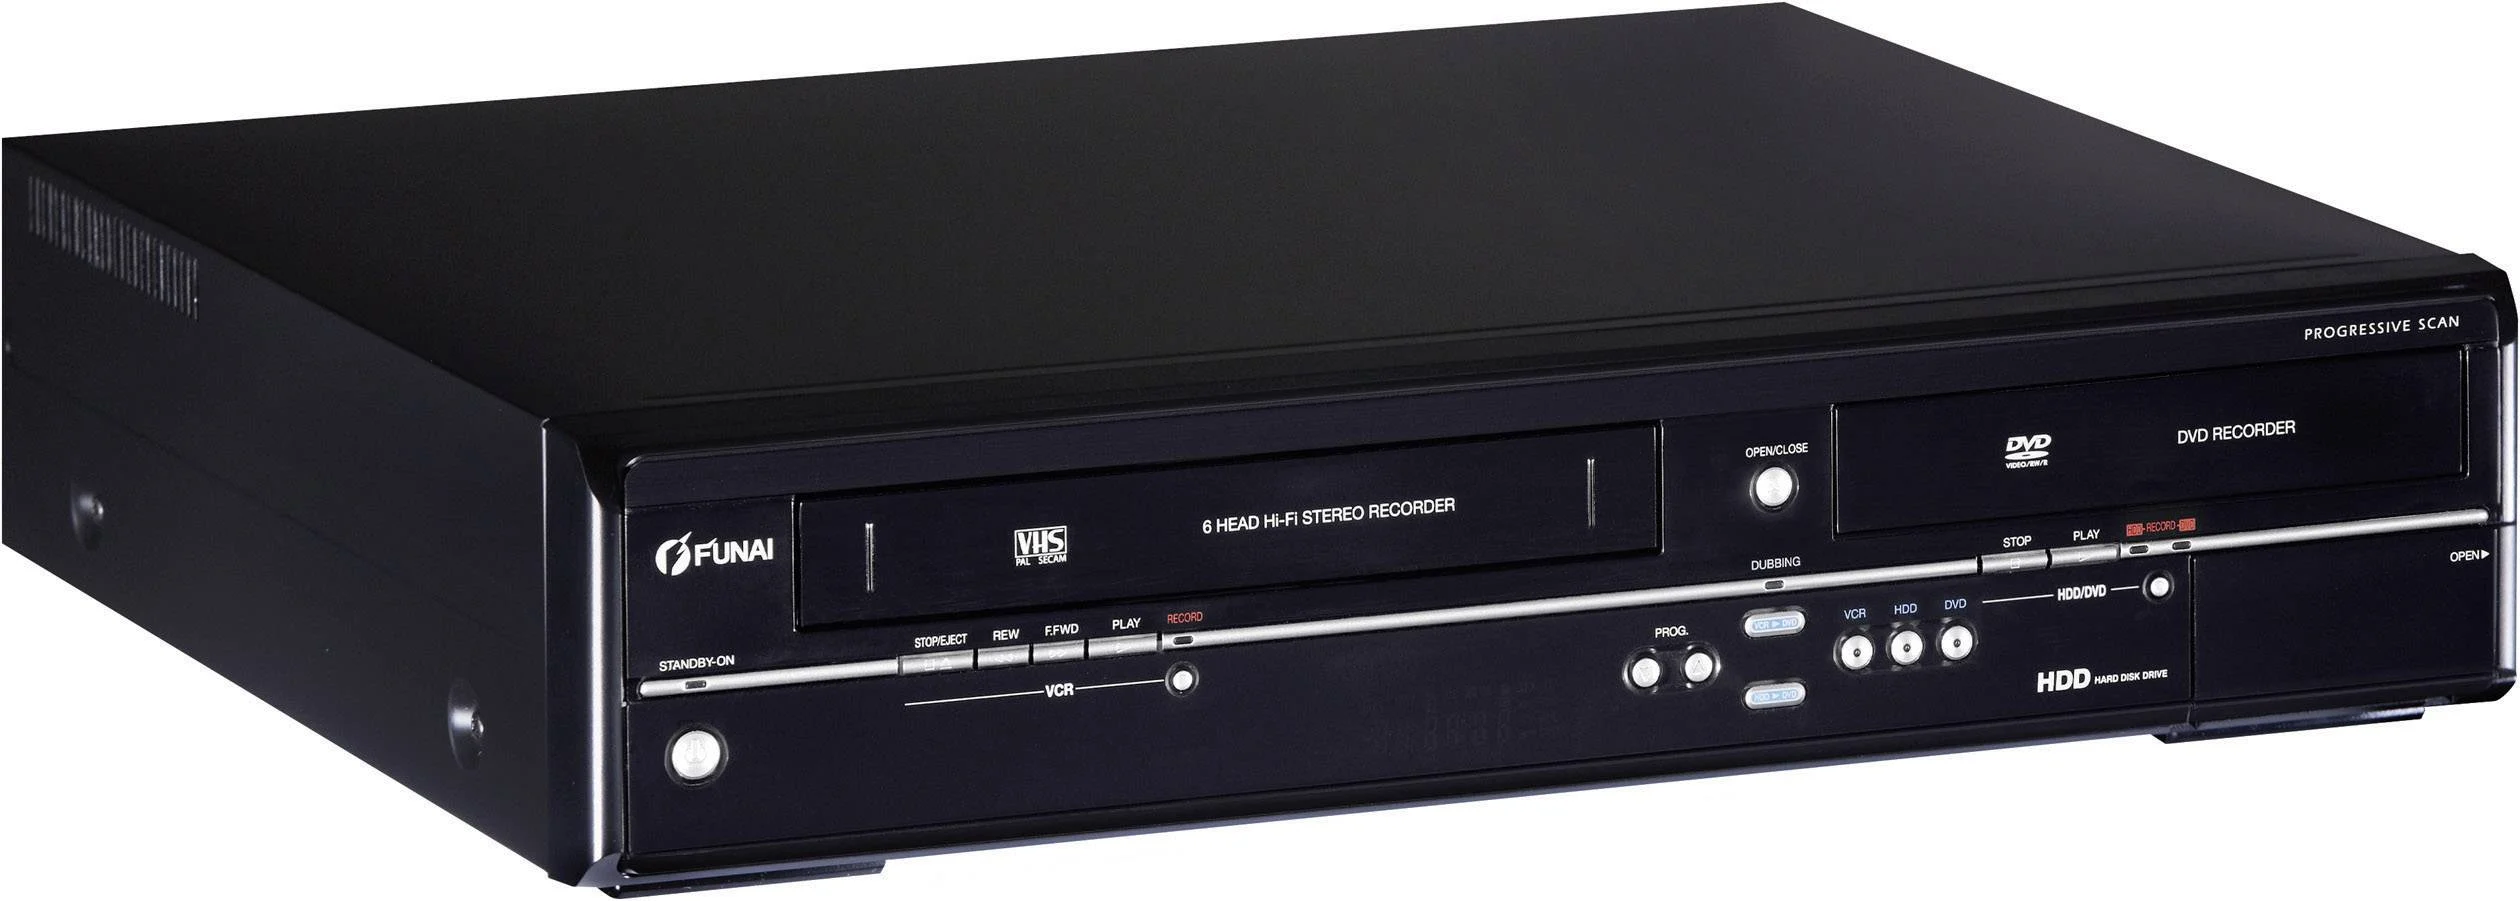 DVD Video Recorder